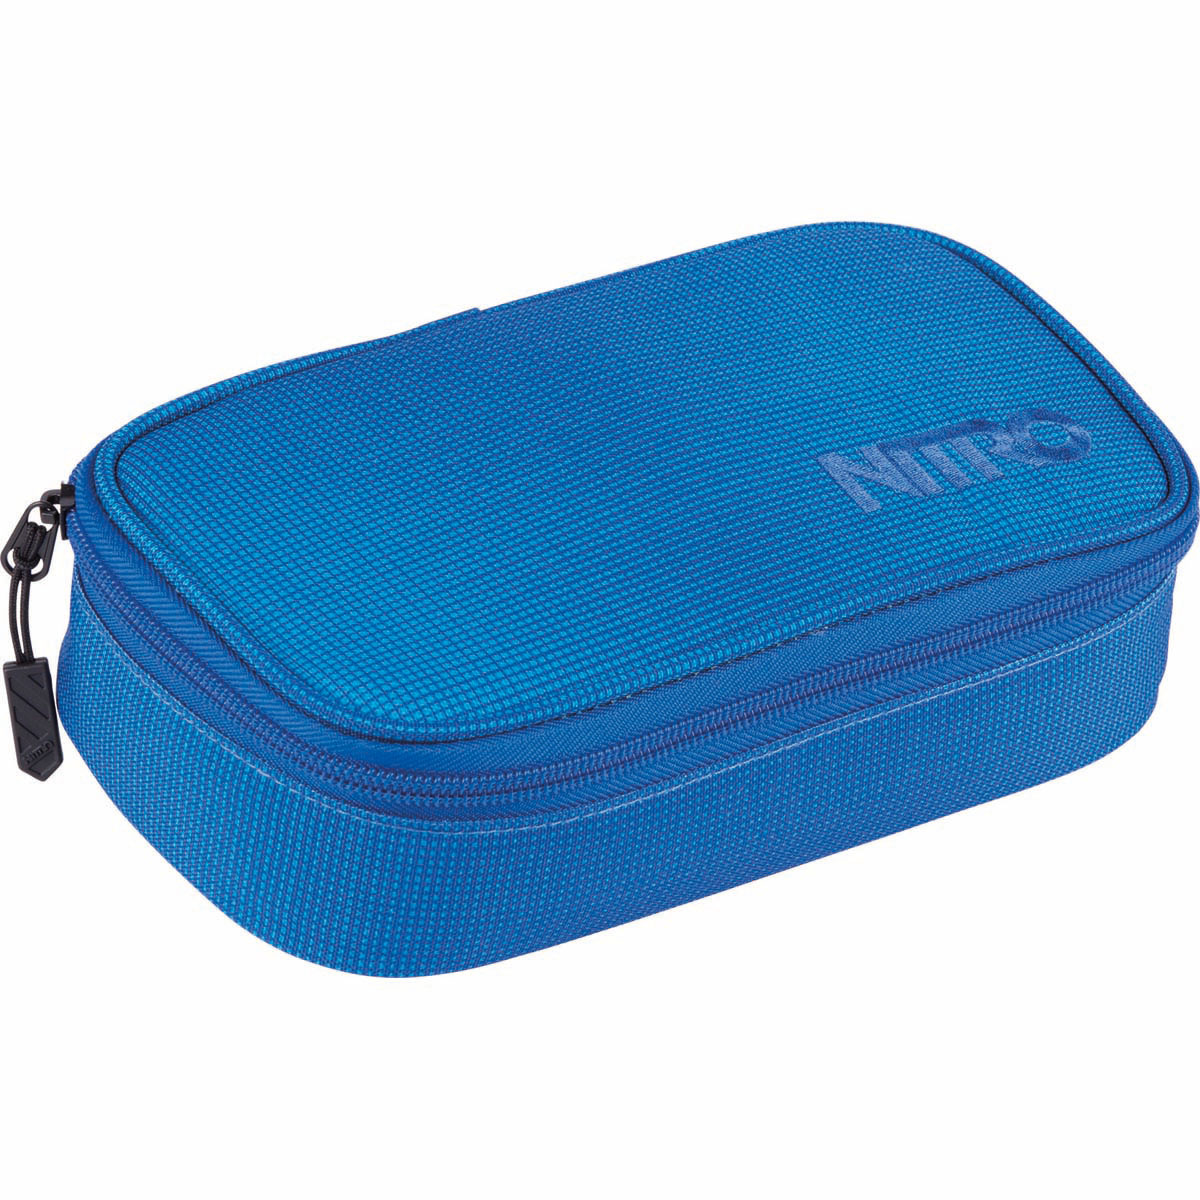 Nitro Pencil Blur Mäppchen Case XL Blue Brilliant | Nitrobags Shop